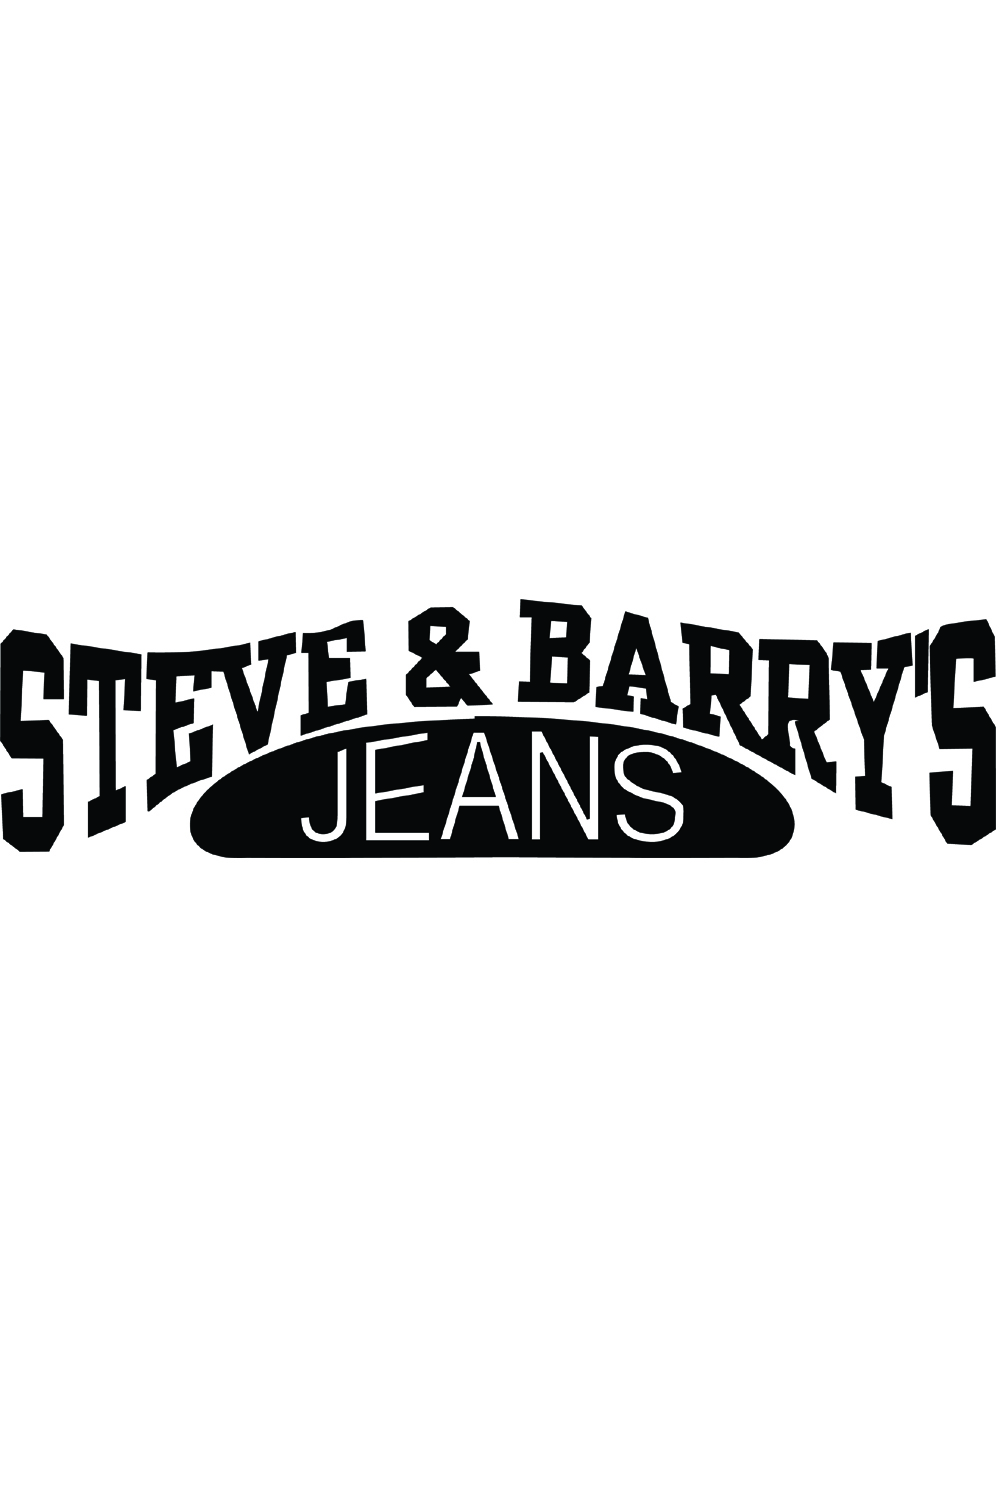 Steve & Barry's T Shirt pinterest preview image.